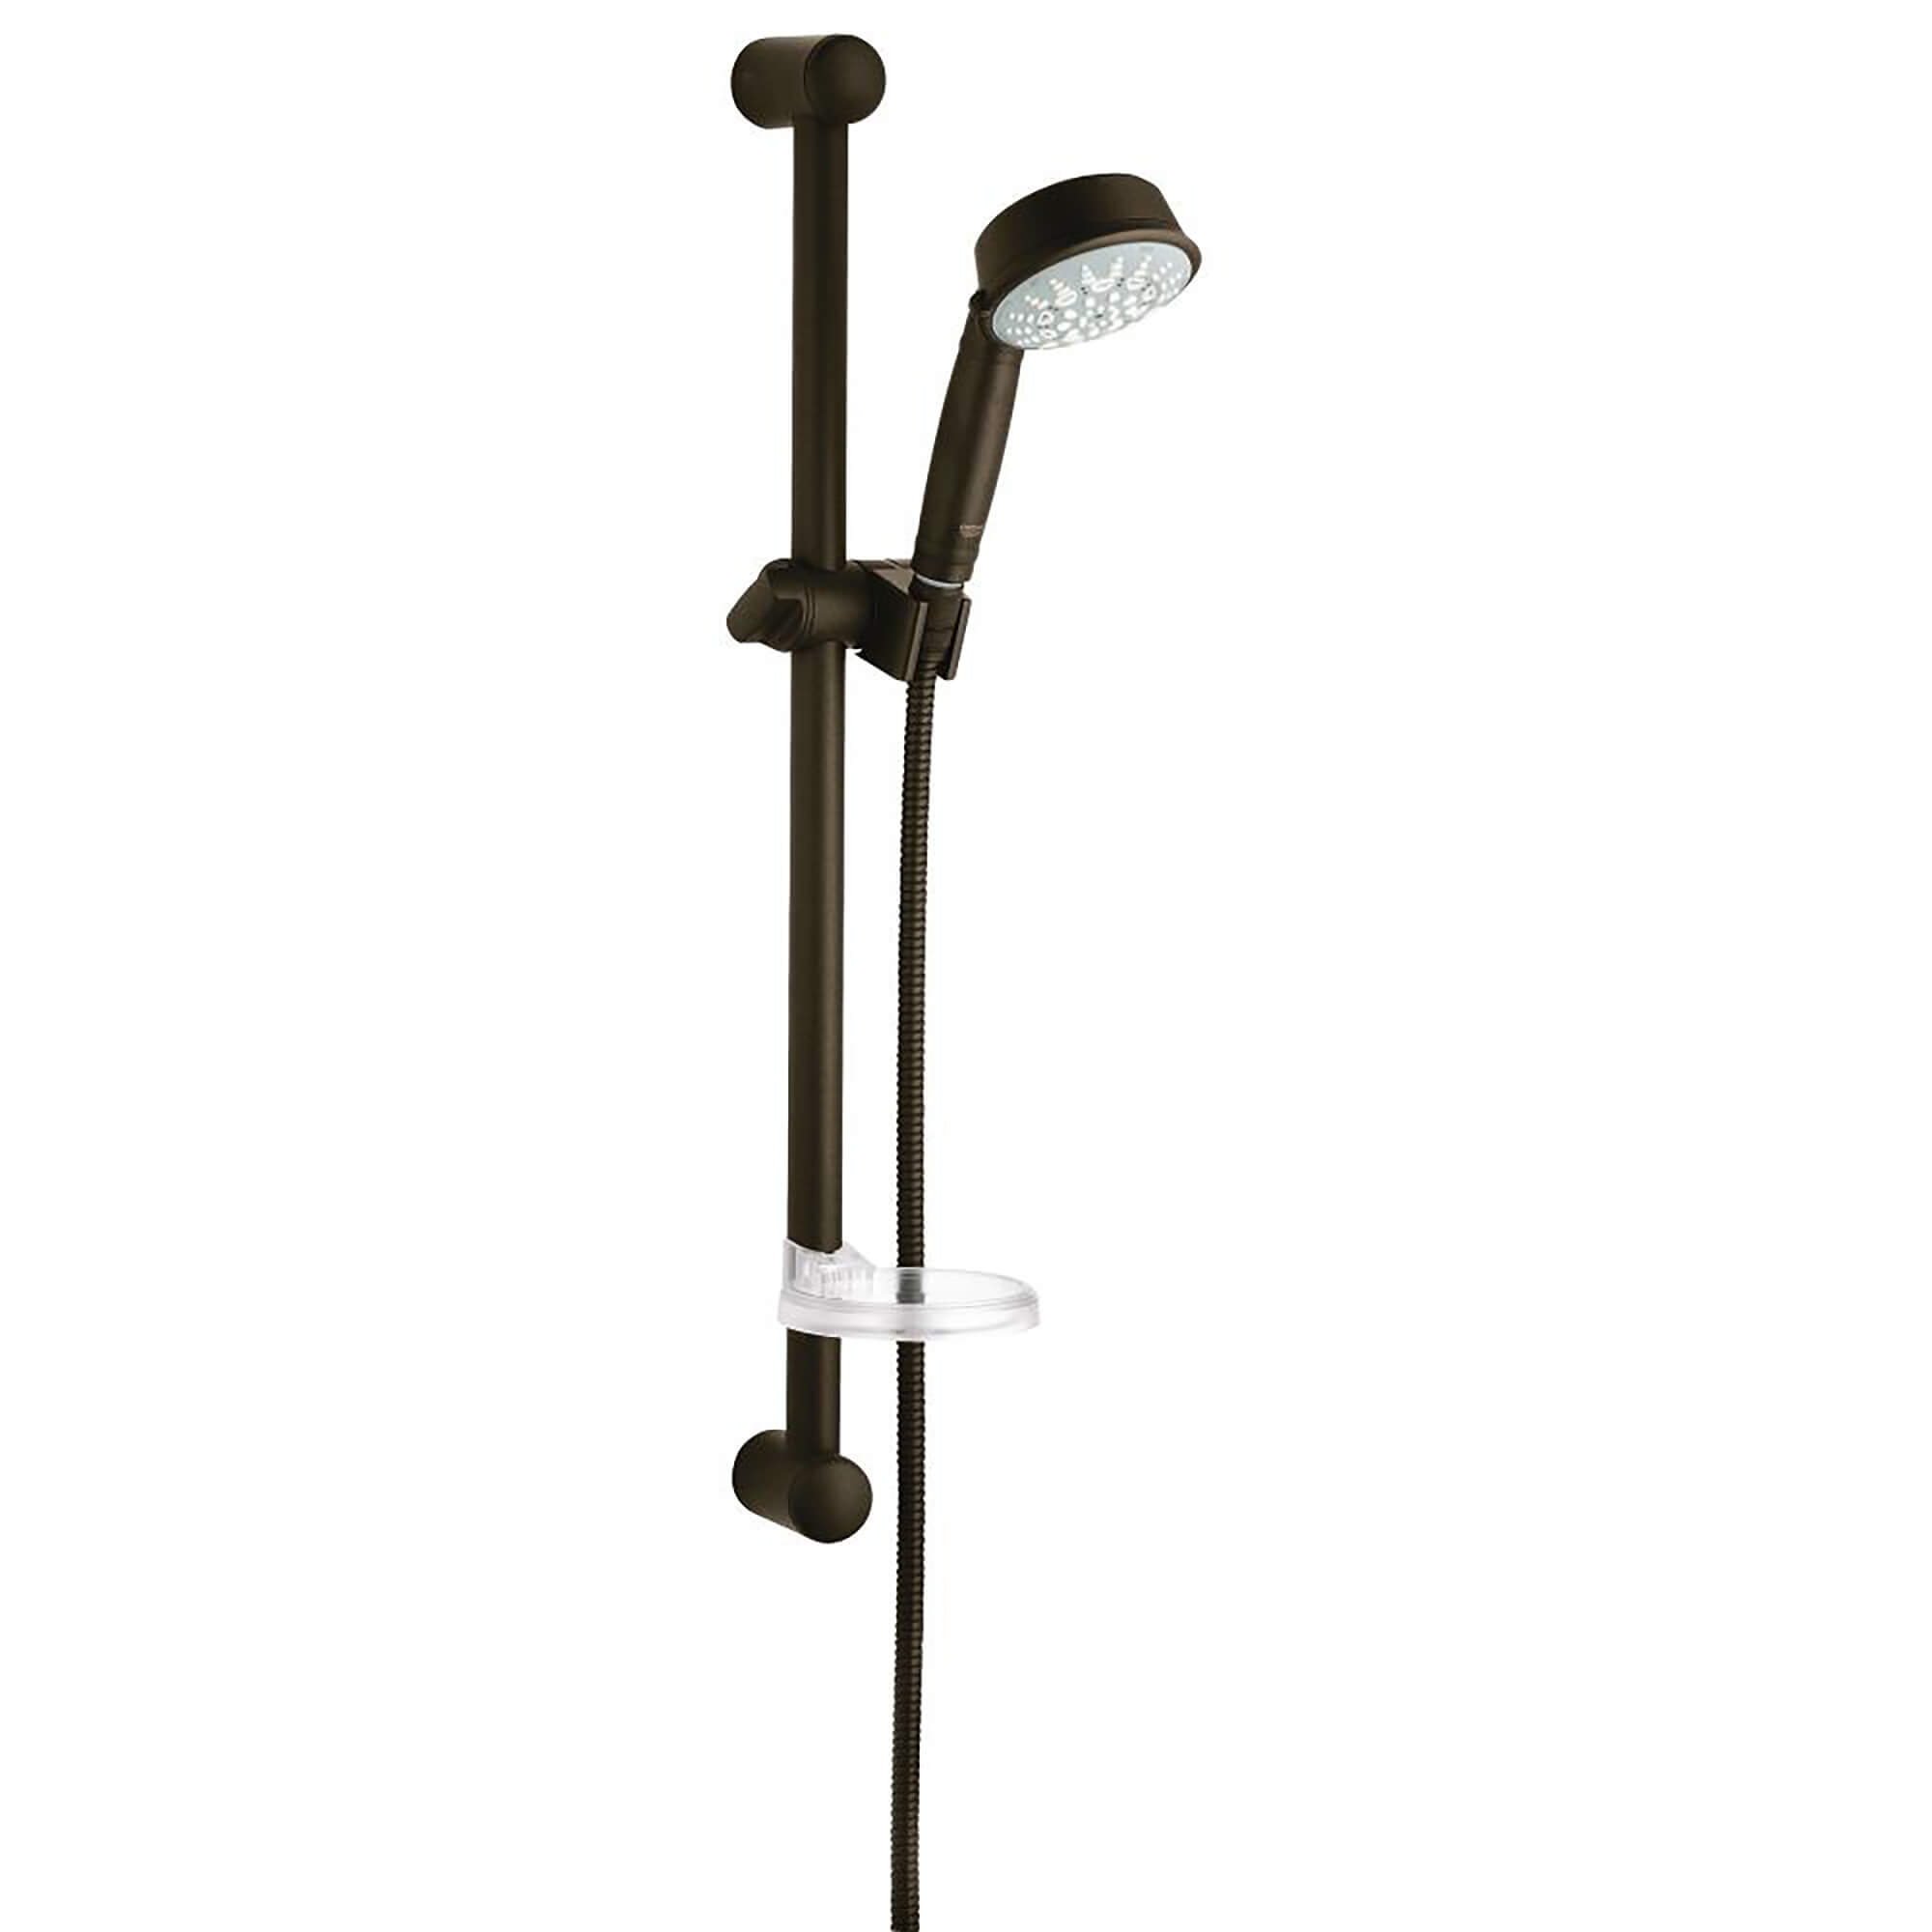 24" Shower Slide Bar Kit - 5 Sprays, 9.5 L/min (2.5 gpm)